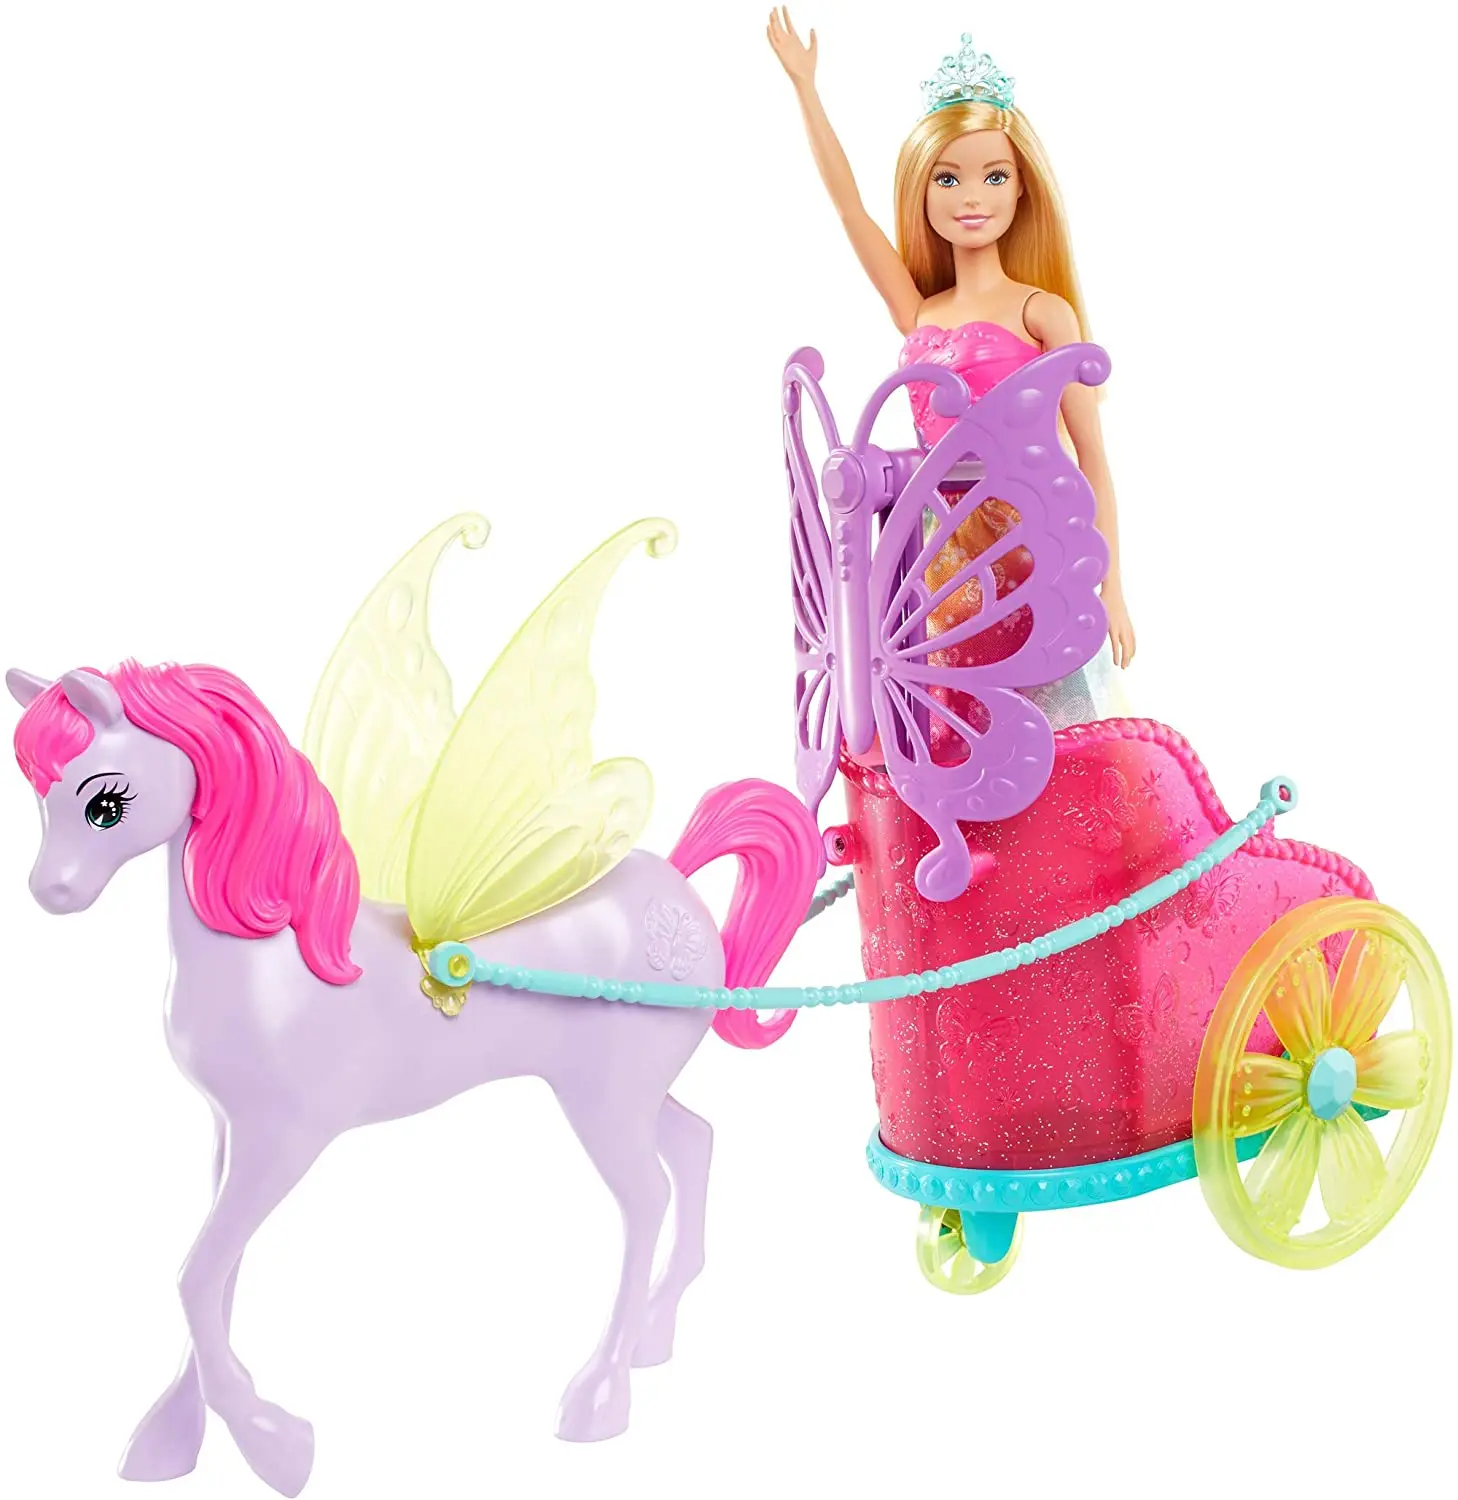 

Original Barbie Dreamtopia Princess Dolls Fantasy Horse Set Girls Doll Accessories Dream Carriage Toys for Children Gift Fashion